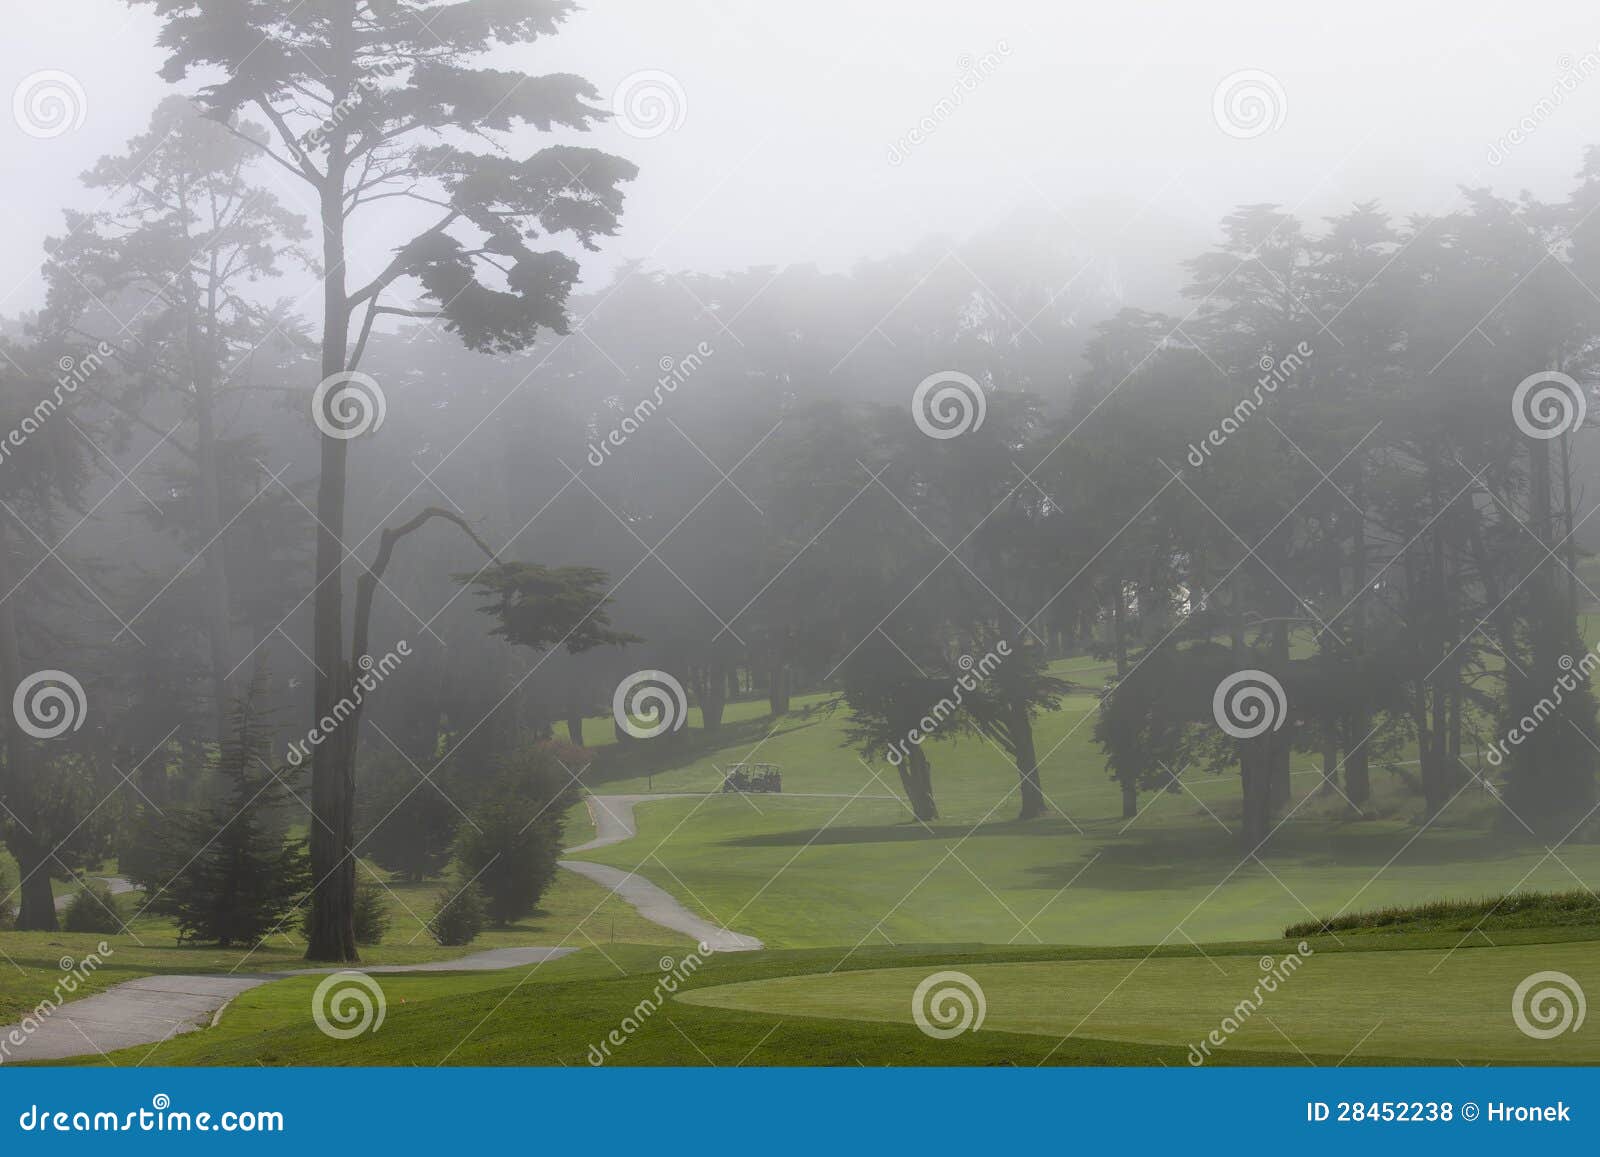 misty golf course